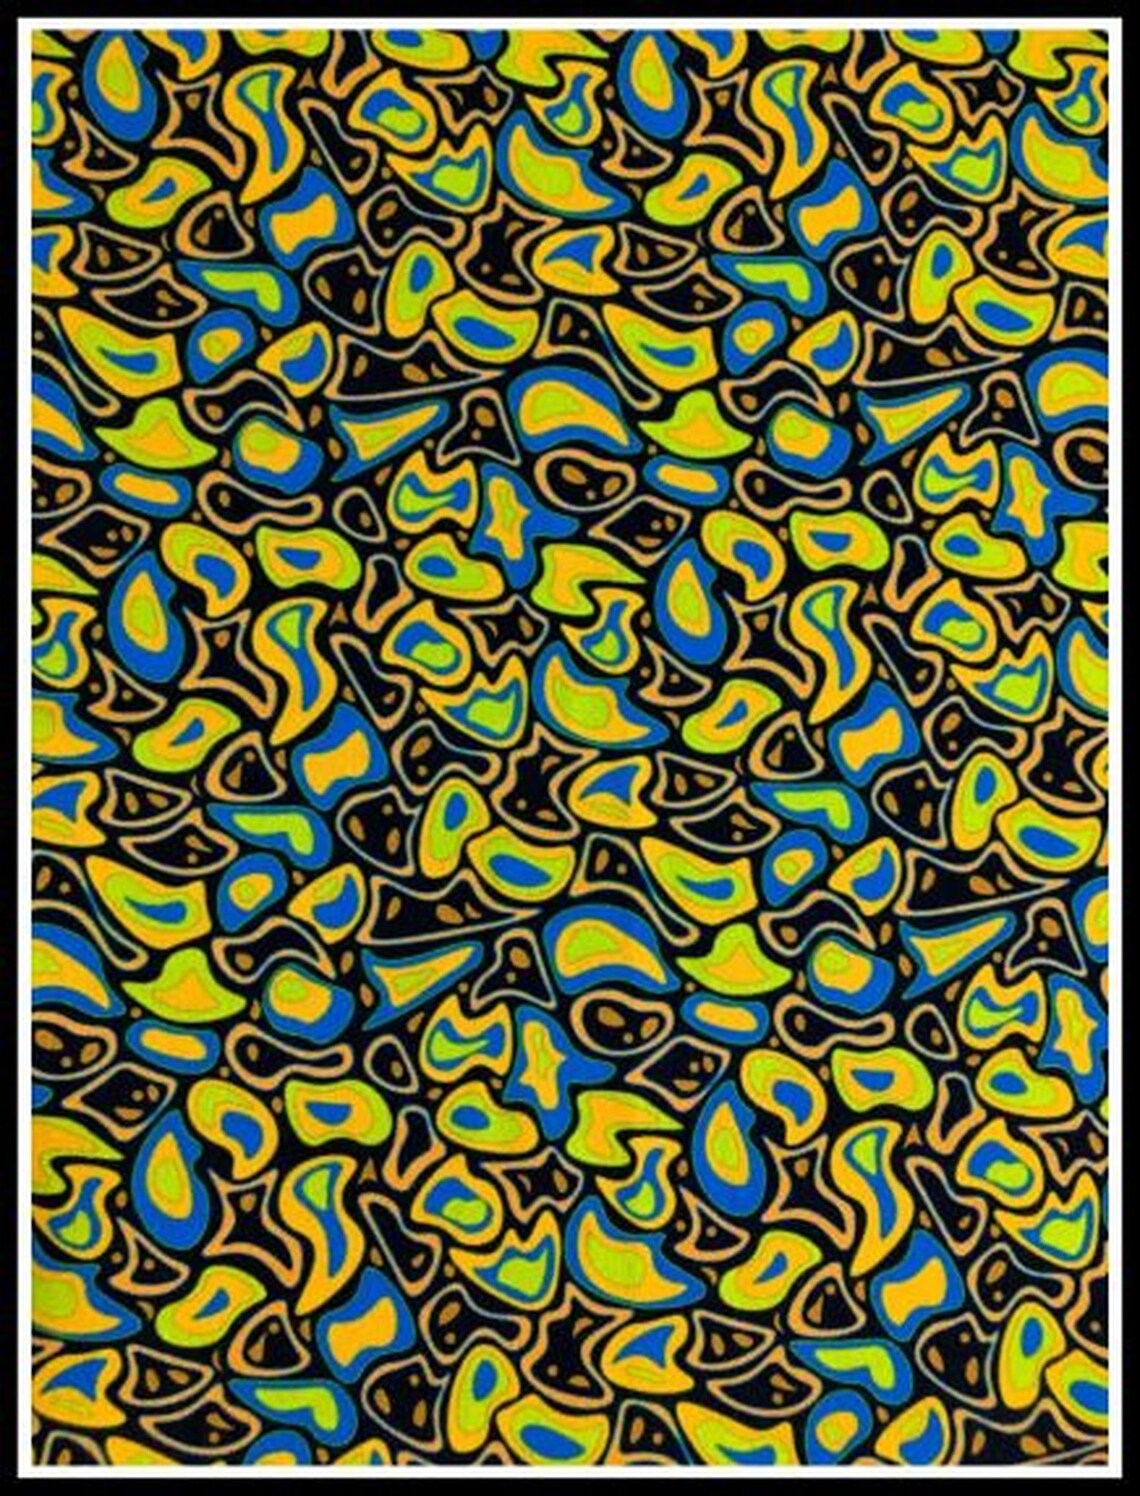 LAVA SPOTS Blue Yellow Psychedelic Fabric 70's Retro | Etsy